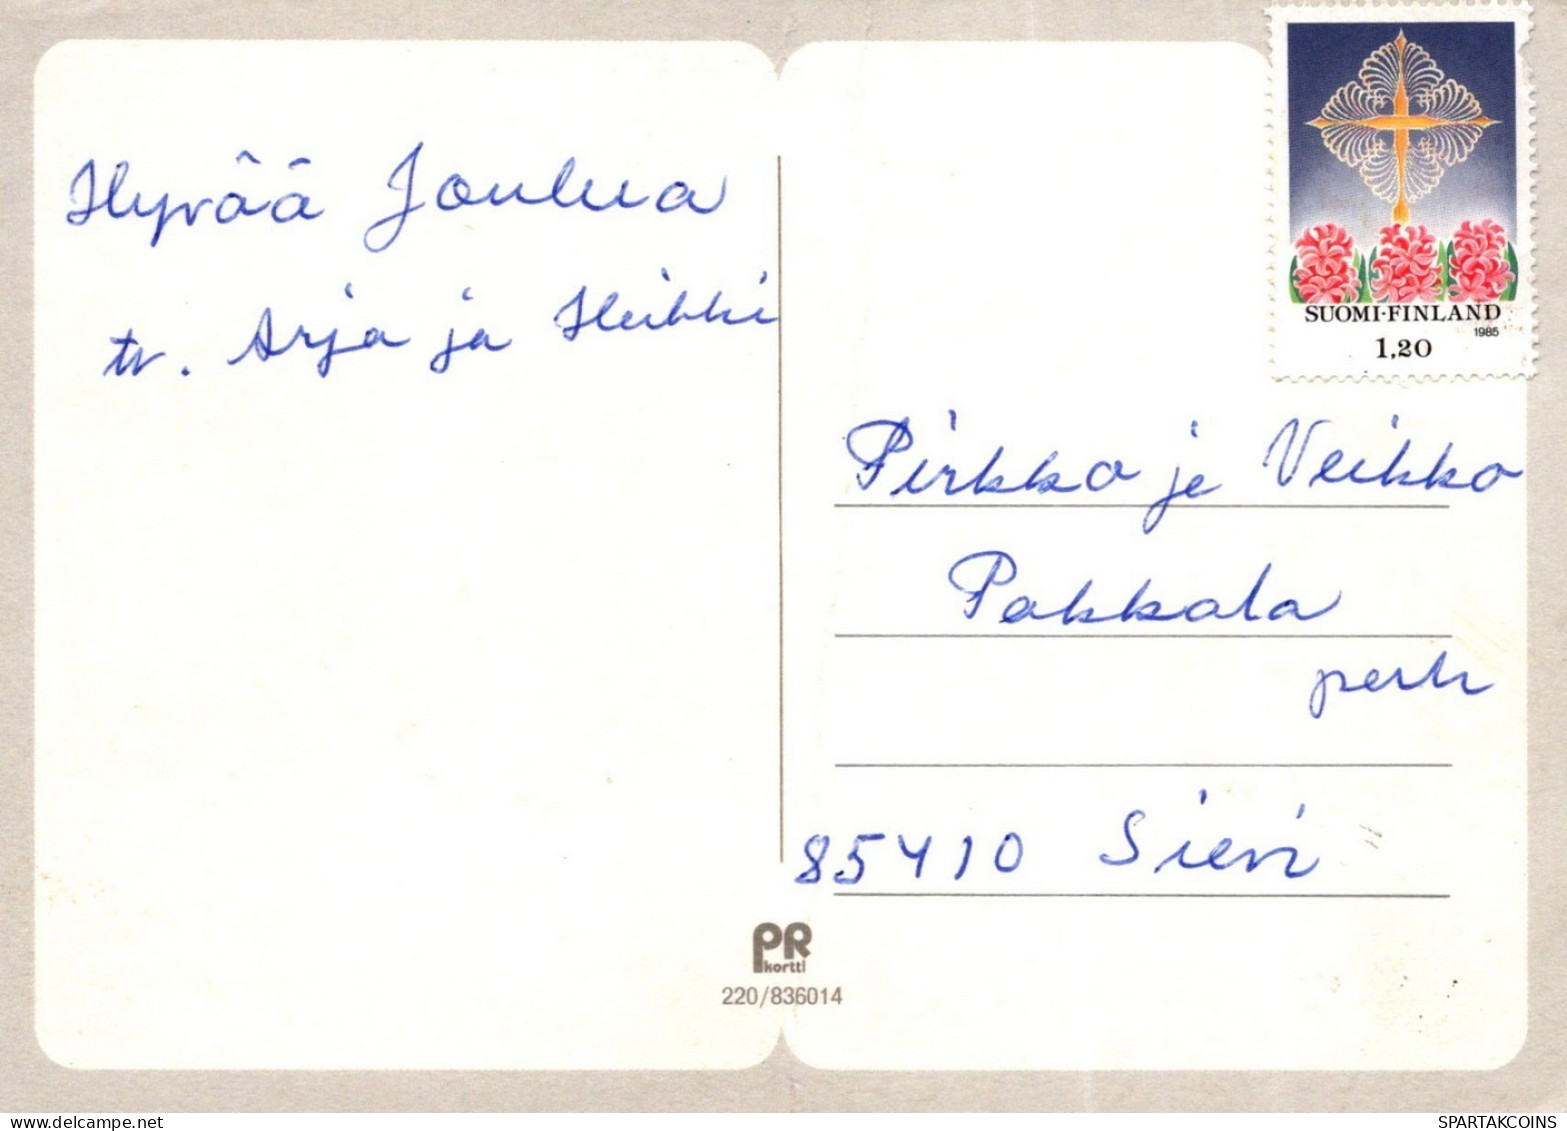 PAPÁ NOEL NAVIDAD Fiesta Vintage Tarjeta Postal CPSM #PAJ643.A - Santa Claus